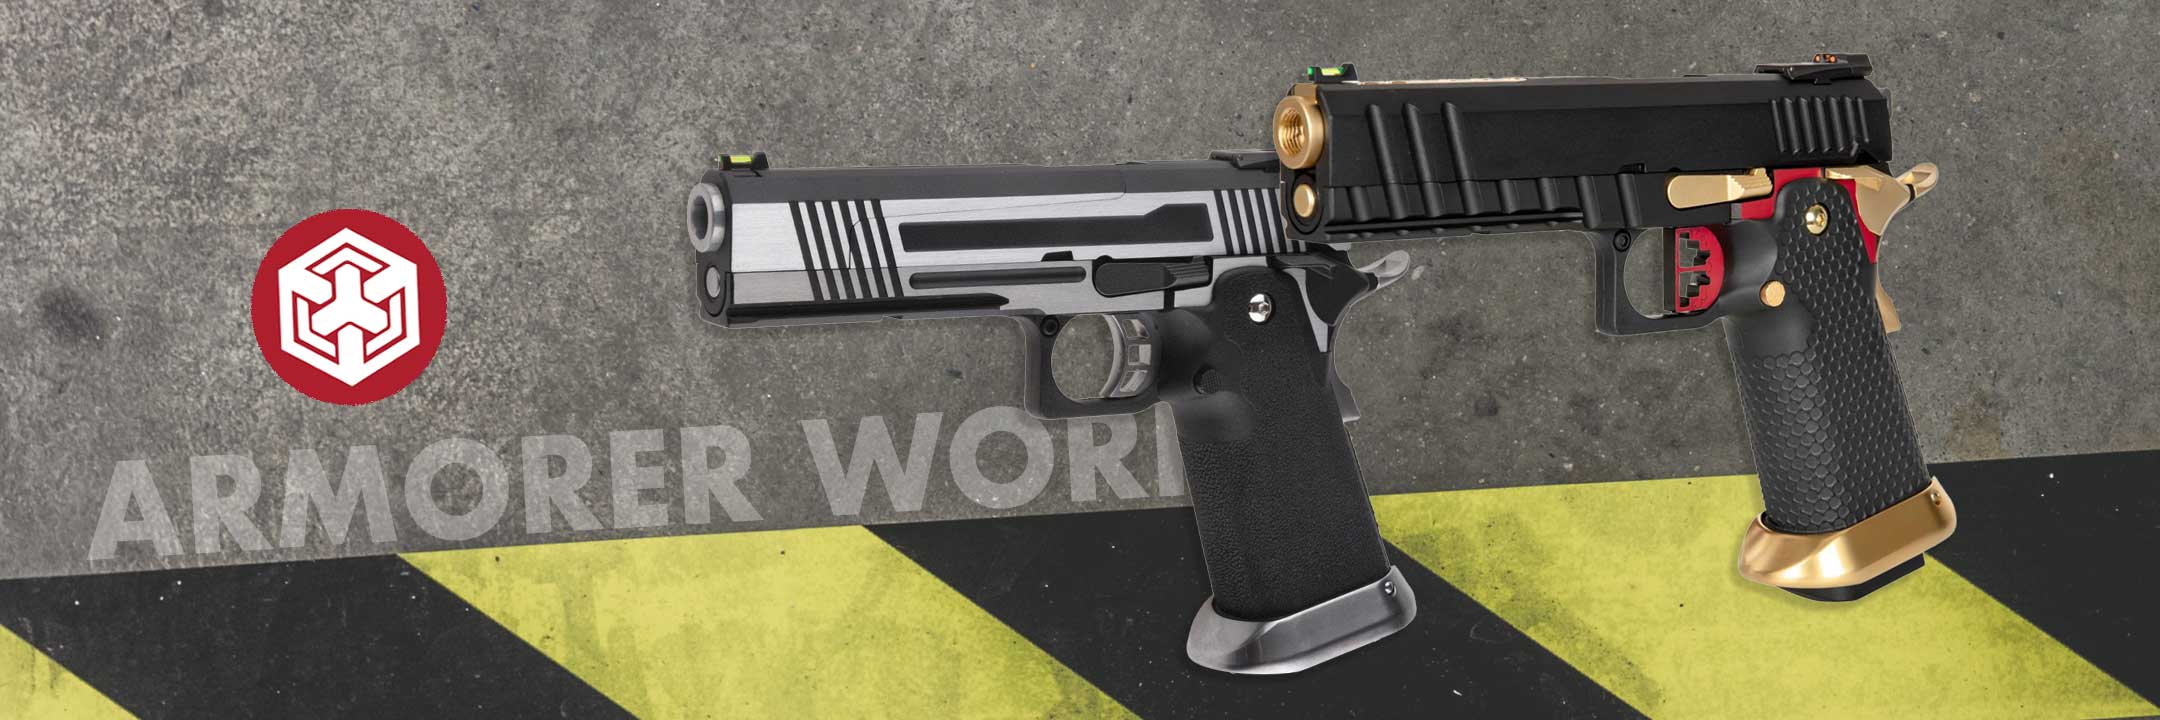 Armoer Works GBB custom airsoft pistols